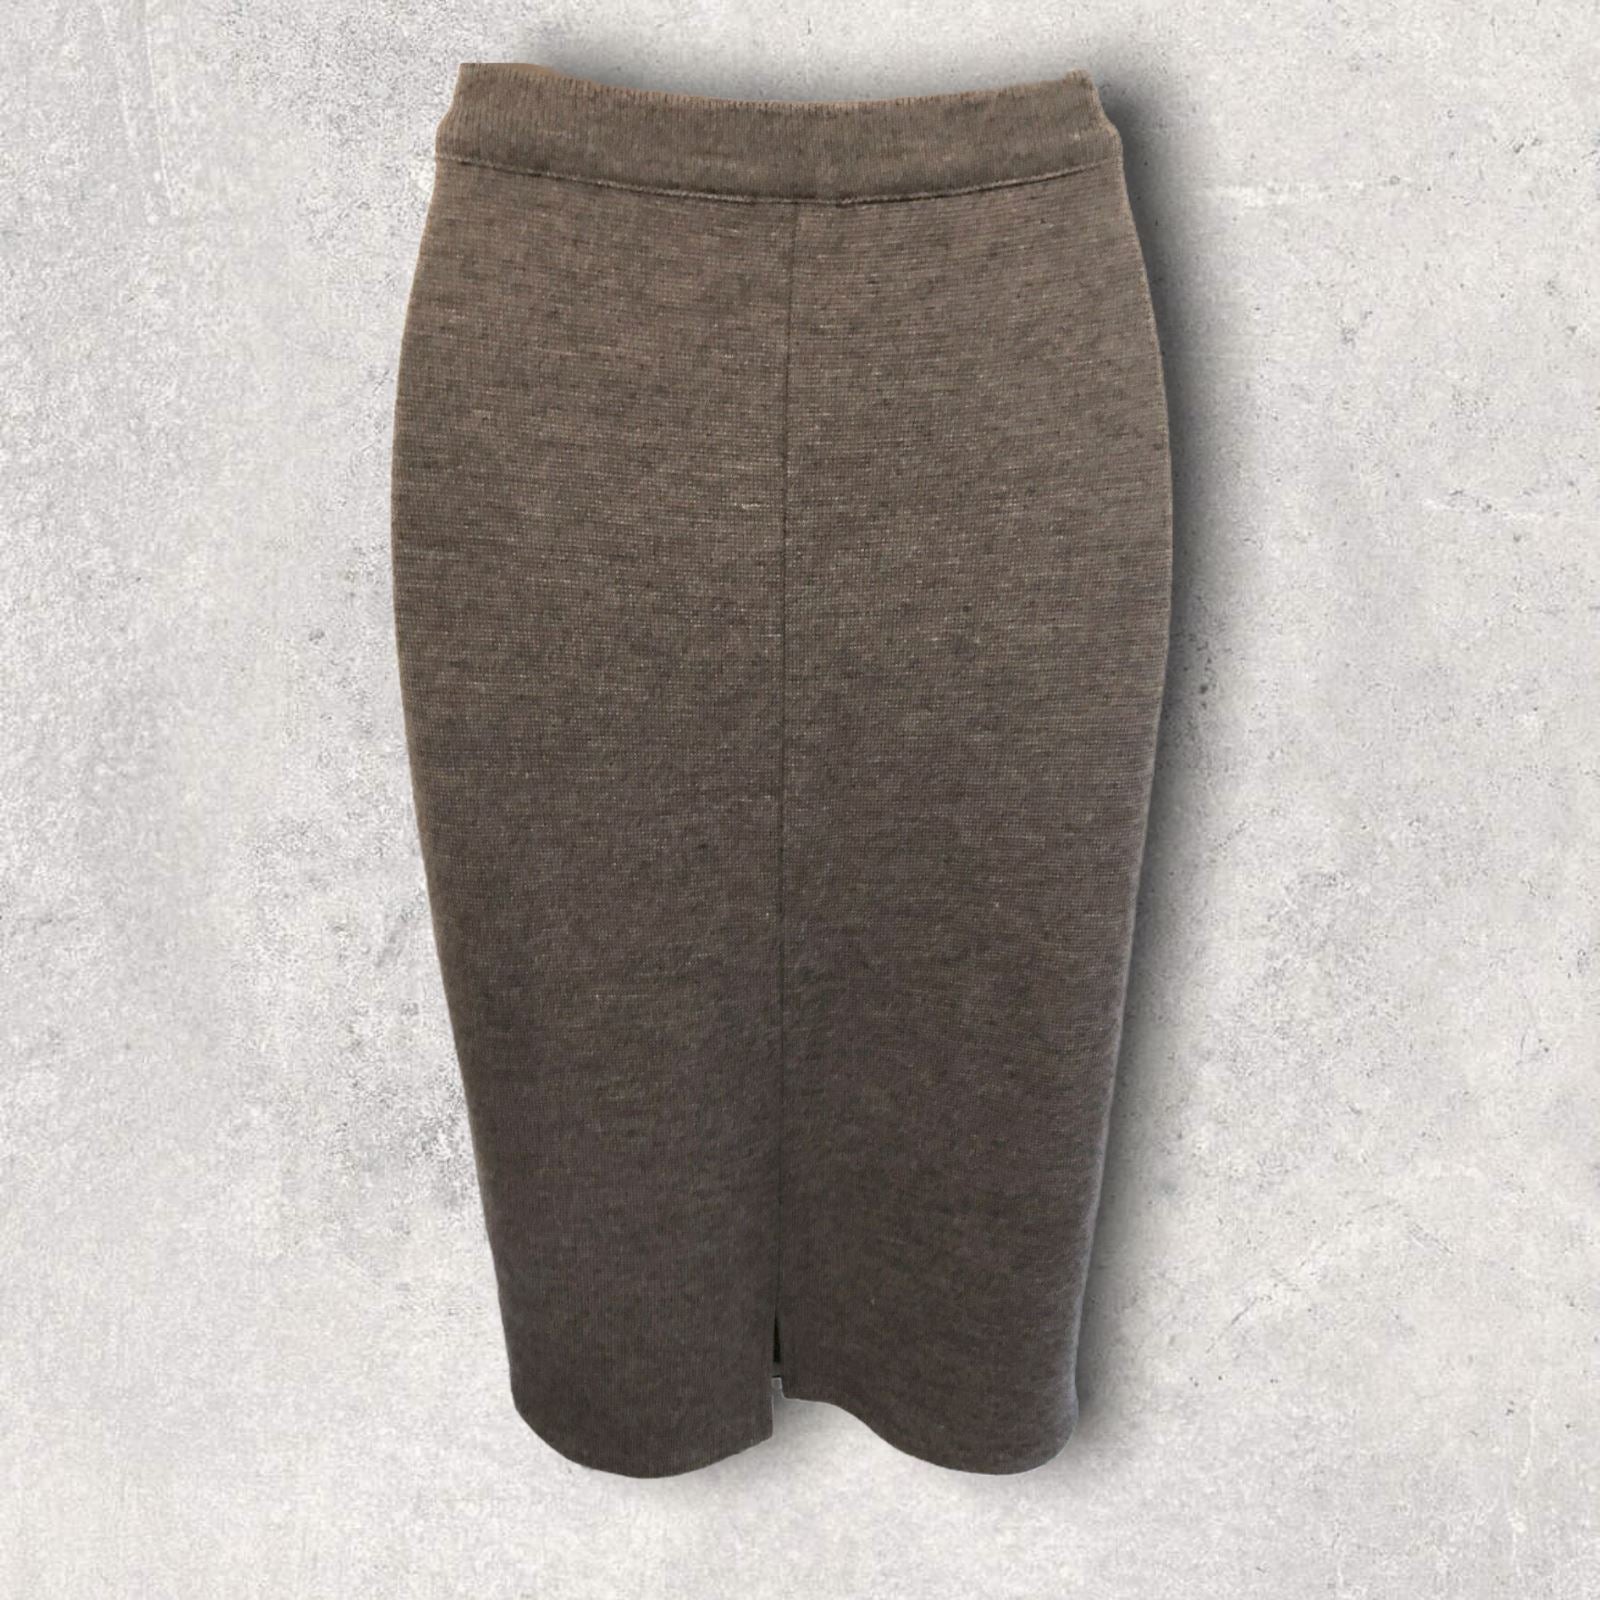 Devernois Grey Wool Mix Fine Knit Pencil Skirt UK 10/12 US 6/8 EU 38/40 Timeless Fashions